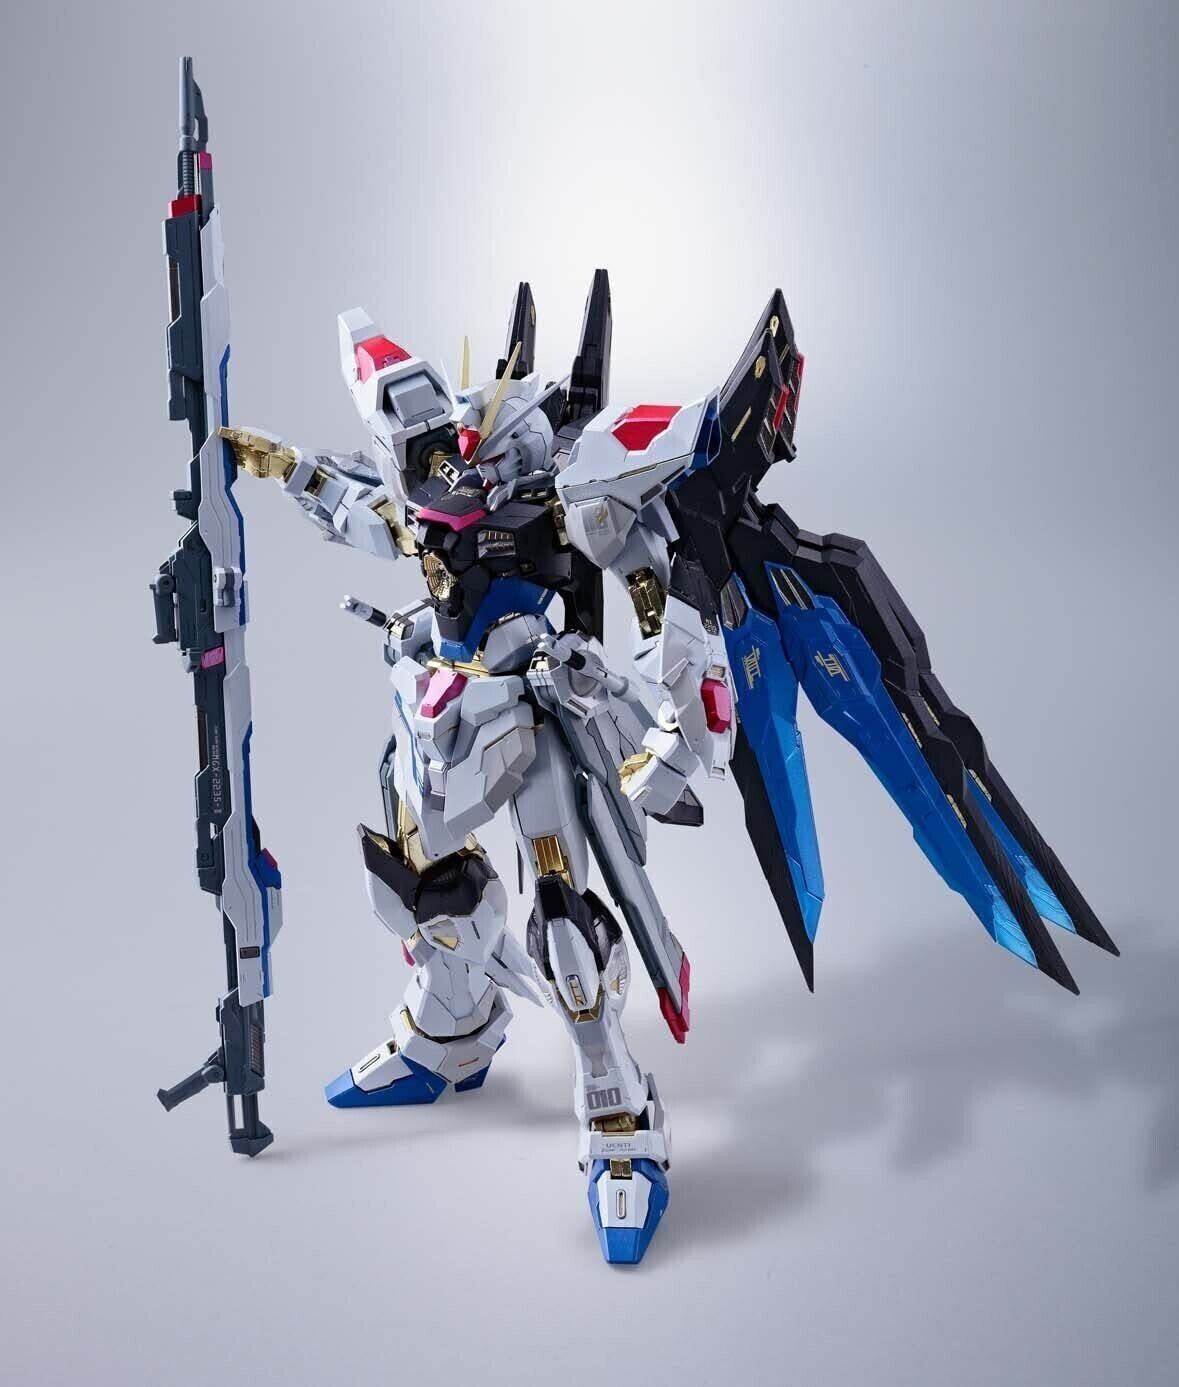 BANDAI METAL BUILD Strike Freedom Gundam Tamashii Nations 2018 Action Figure